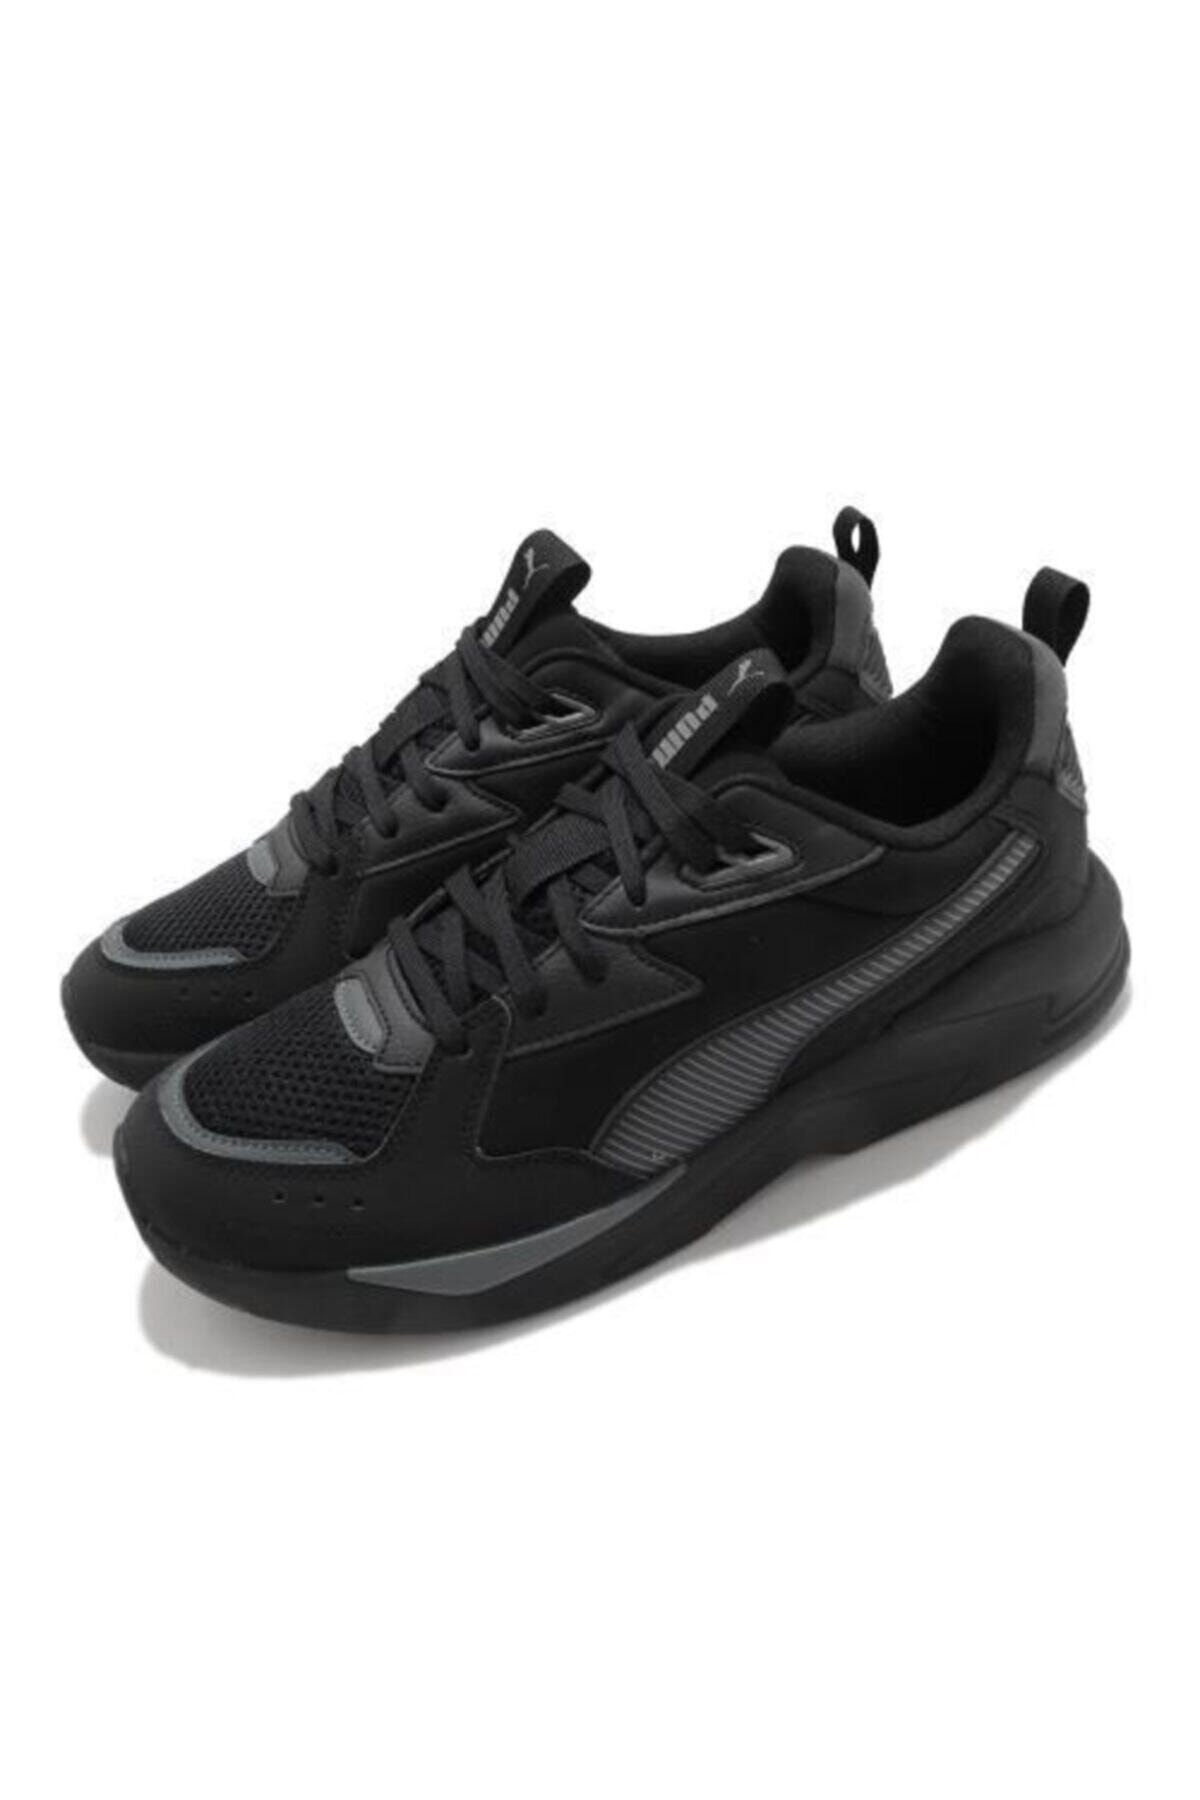 Puma X-ray Lite Pro Black Sneaker Ayakkabı